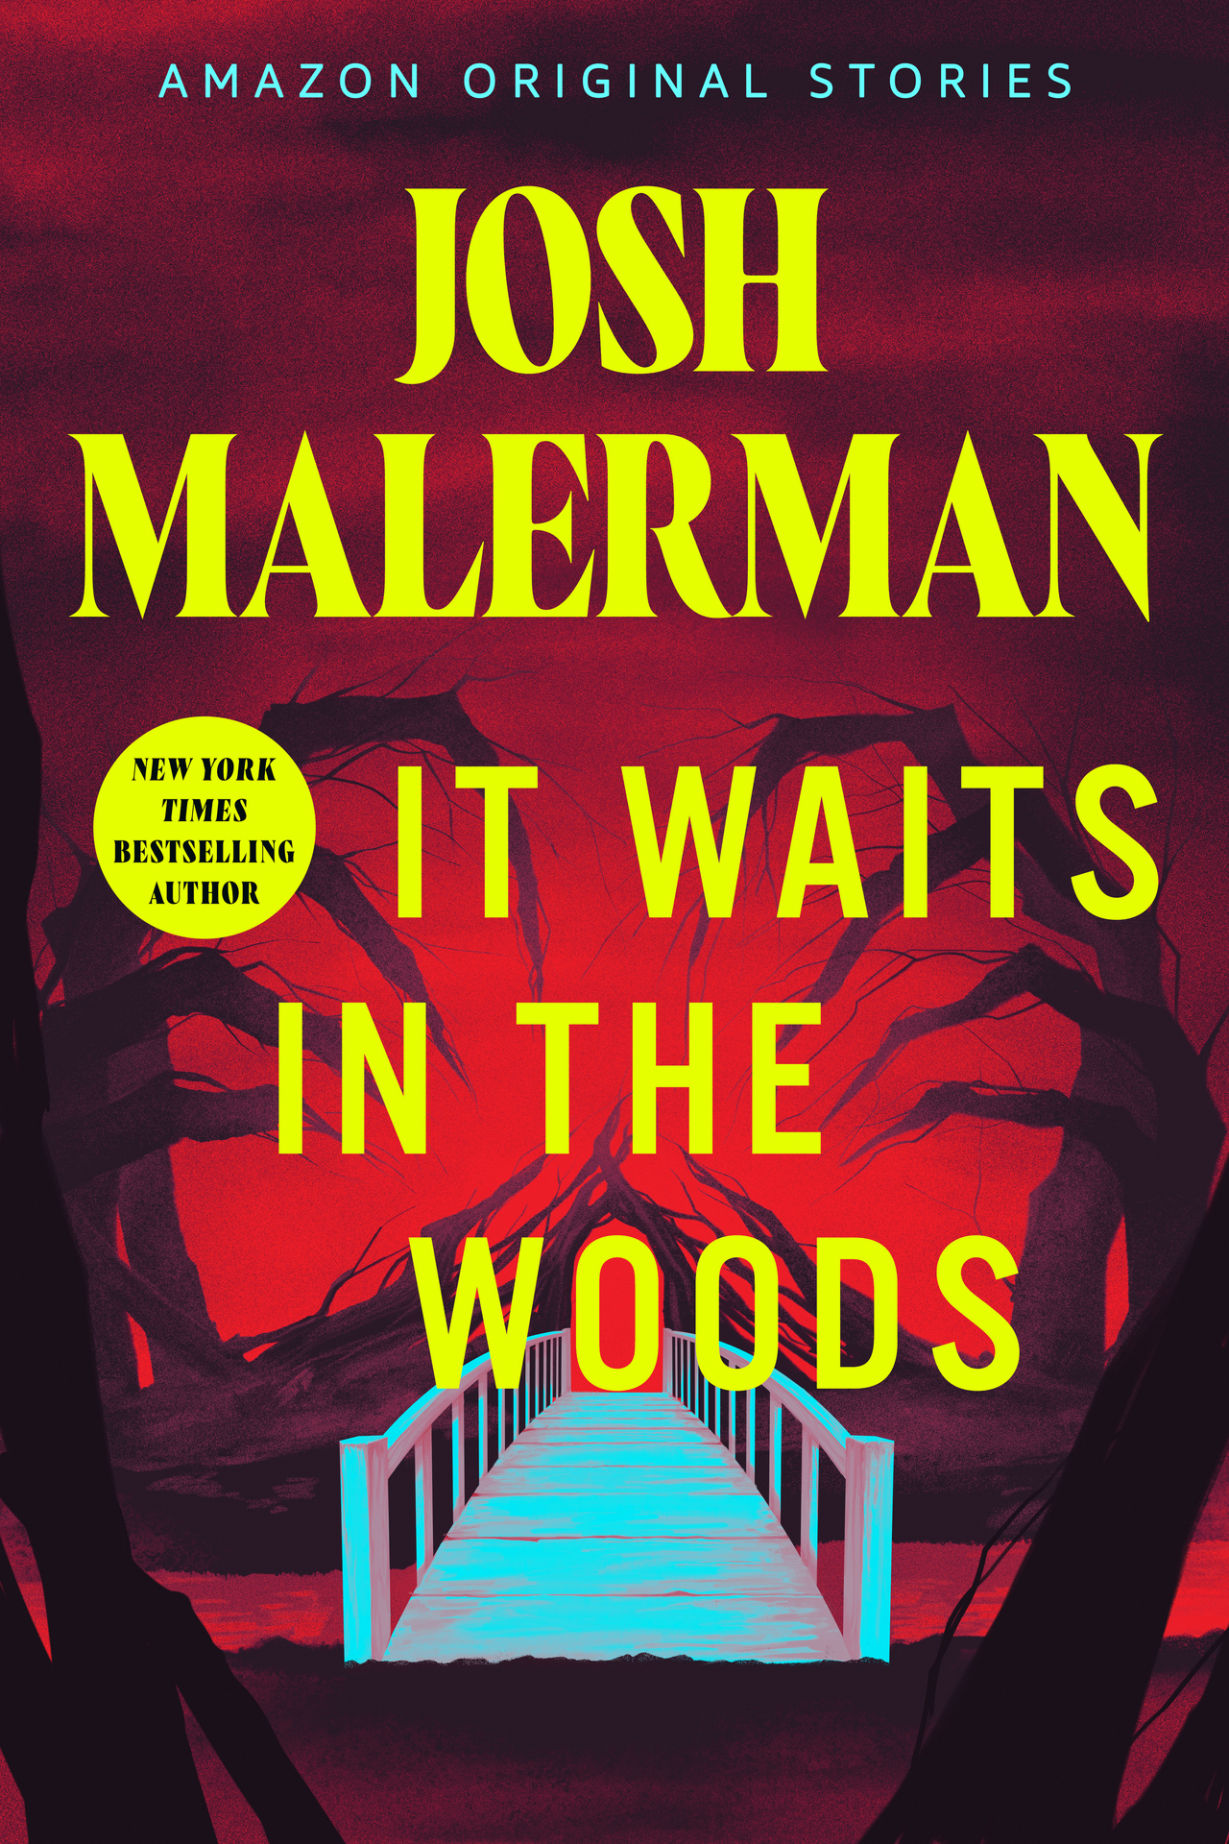 Josh Malerman: It Waits in the Woods (EBook, Amazon Original Stories)